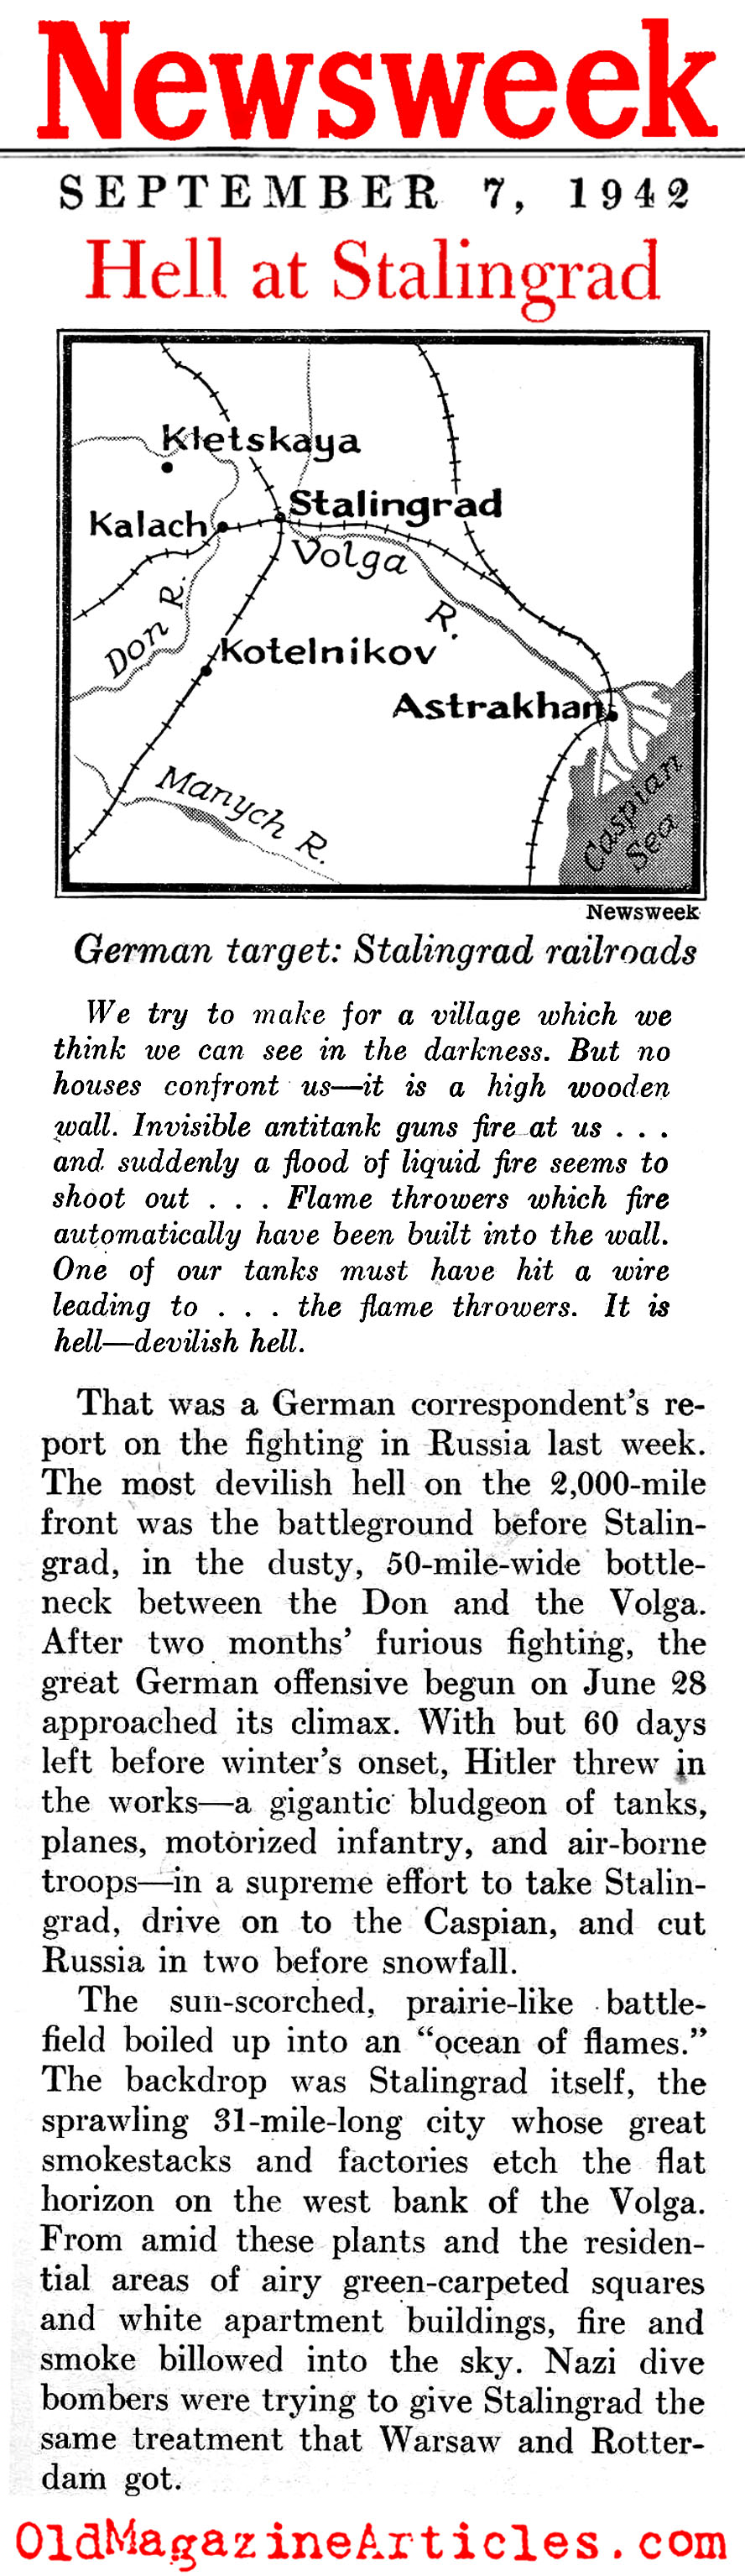 Stalingrad Hell (Newsweek Magazine, 1942)